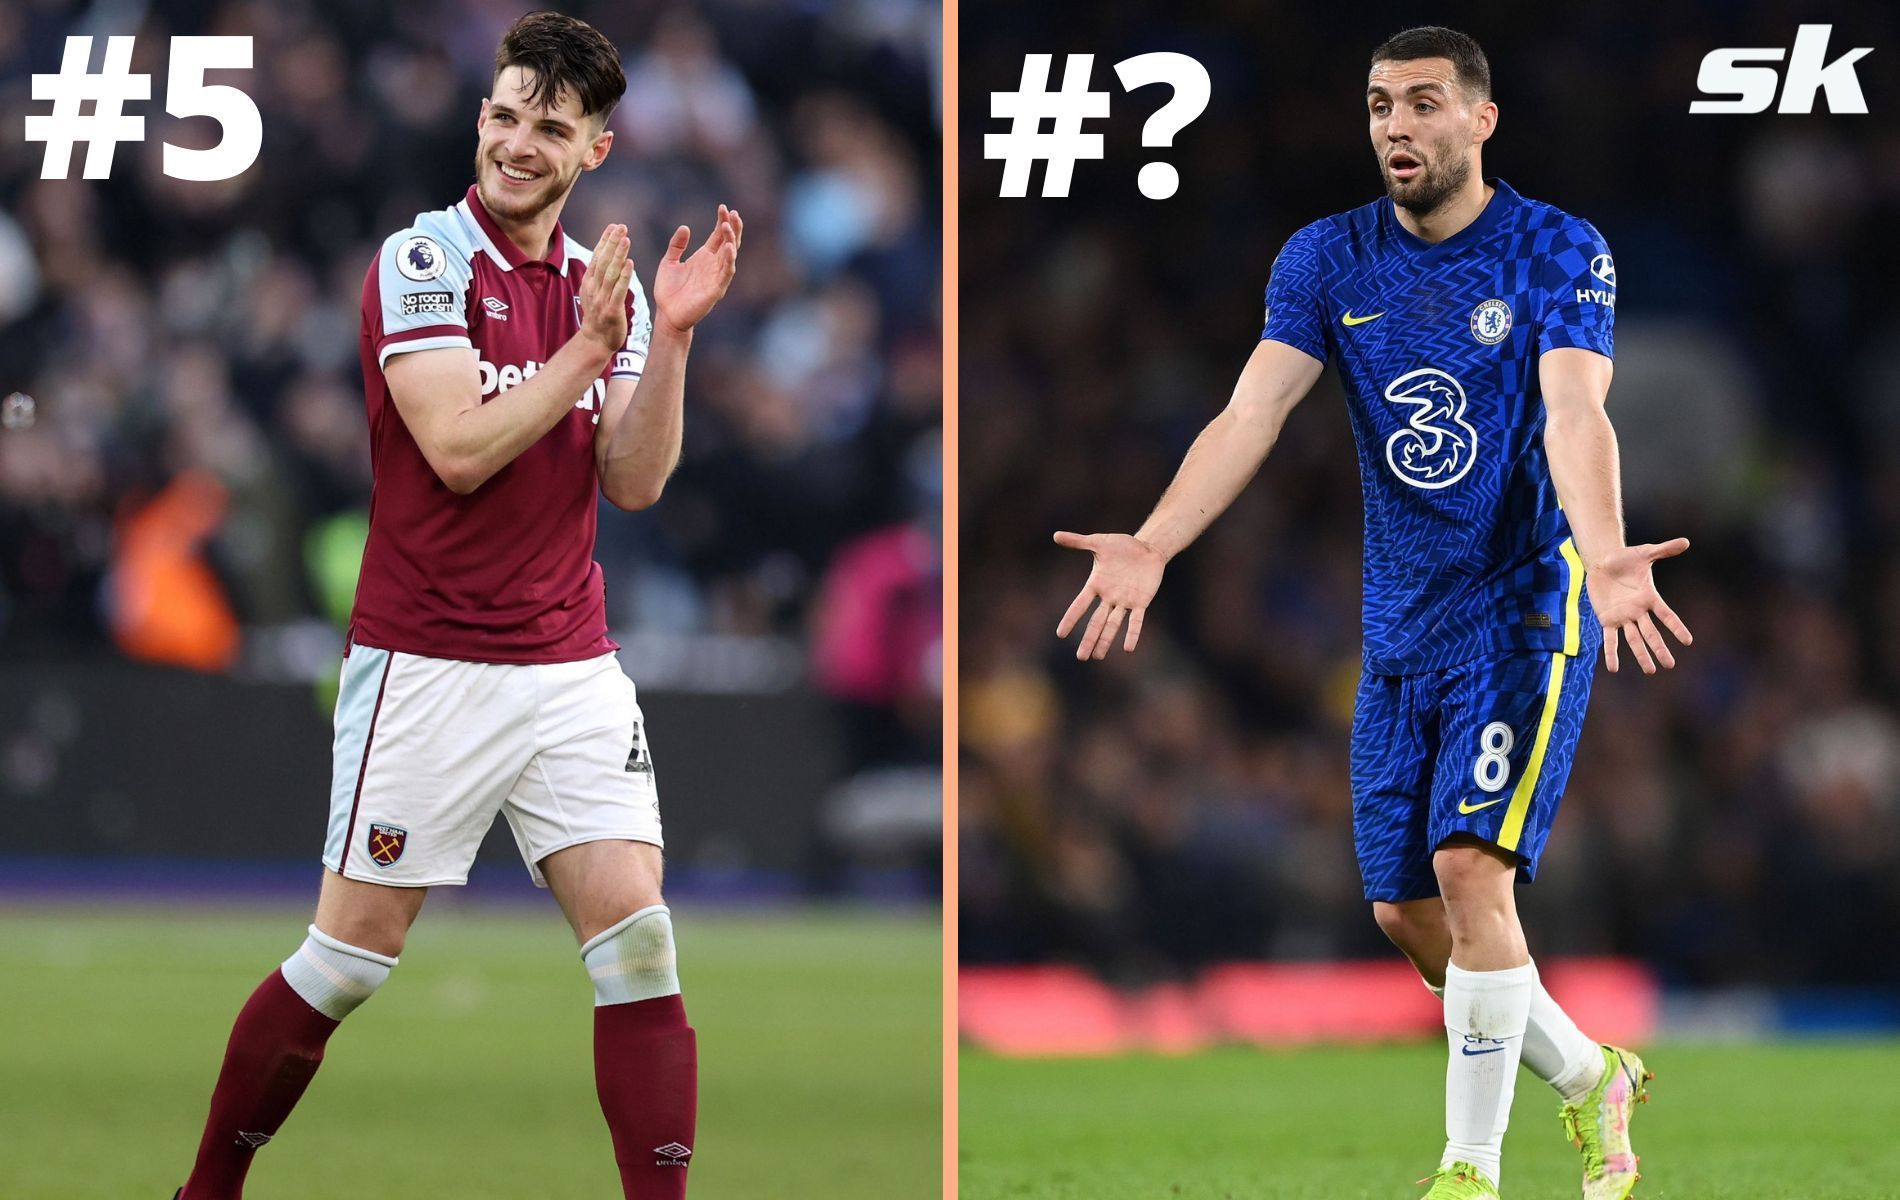 Who is the current best Premier League midfielder